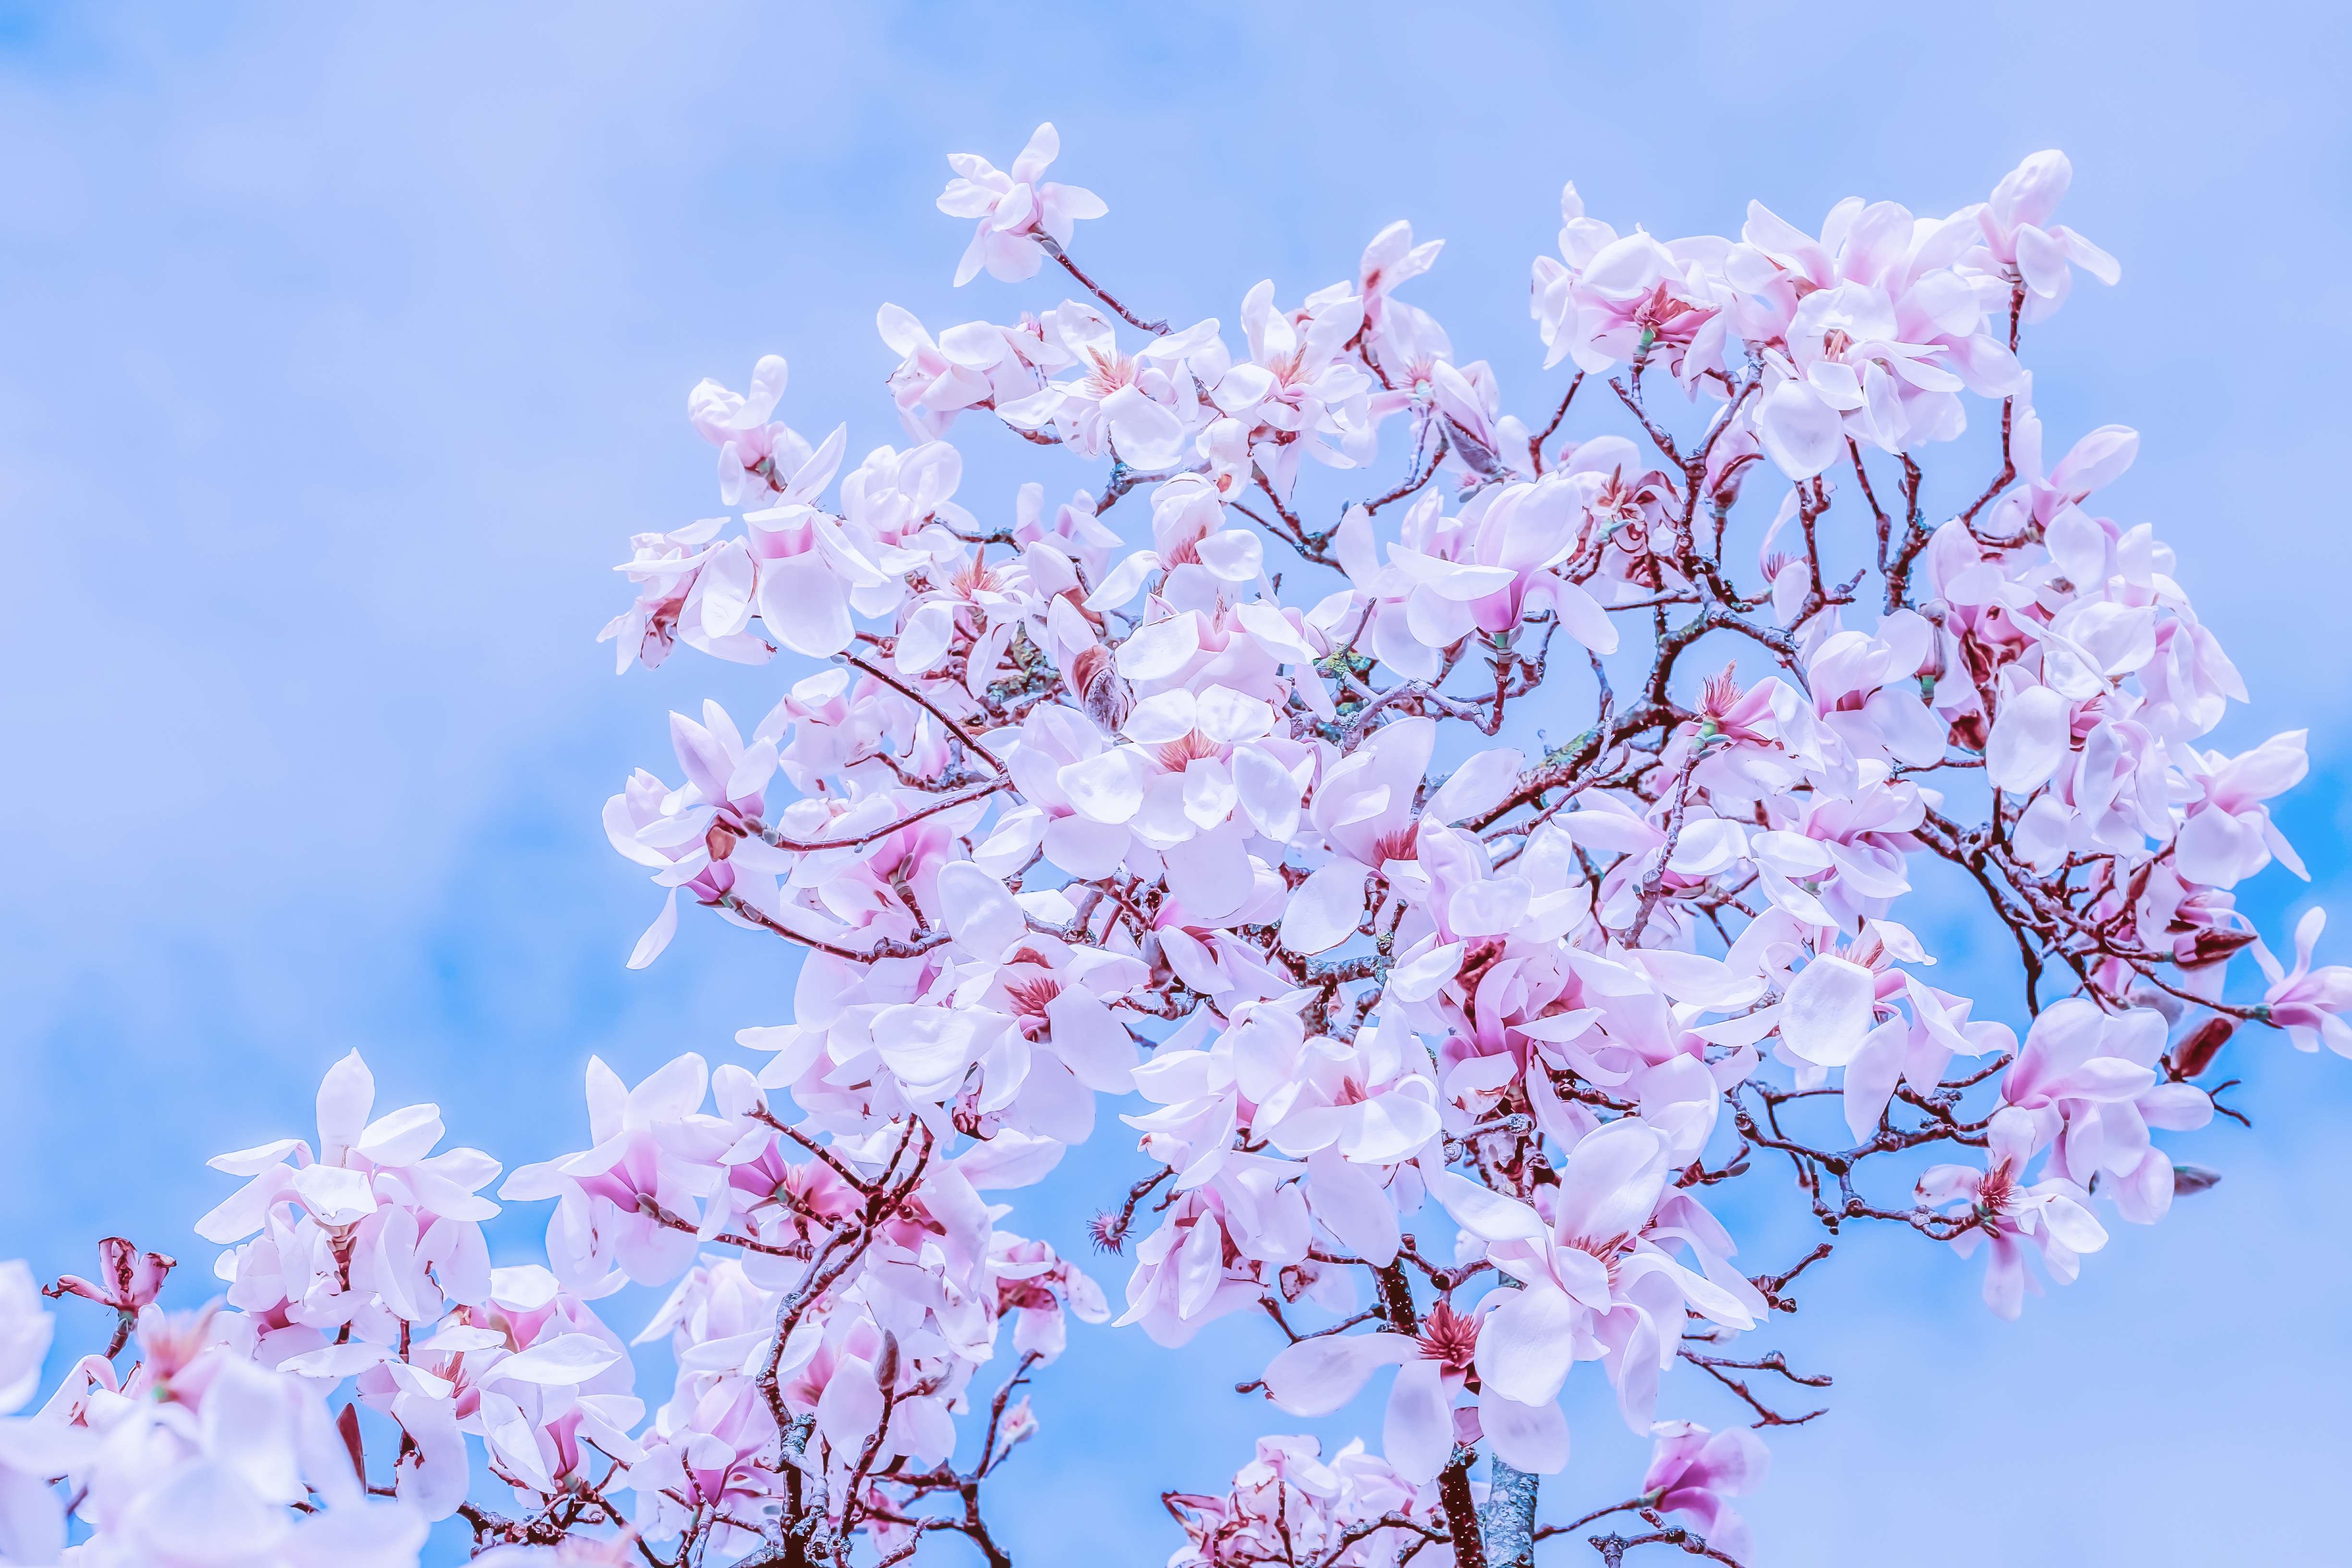 magnolia, bloom, flowers, sky, branches, flowering